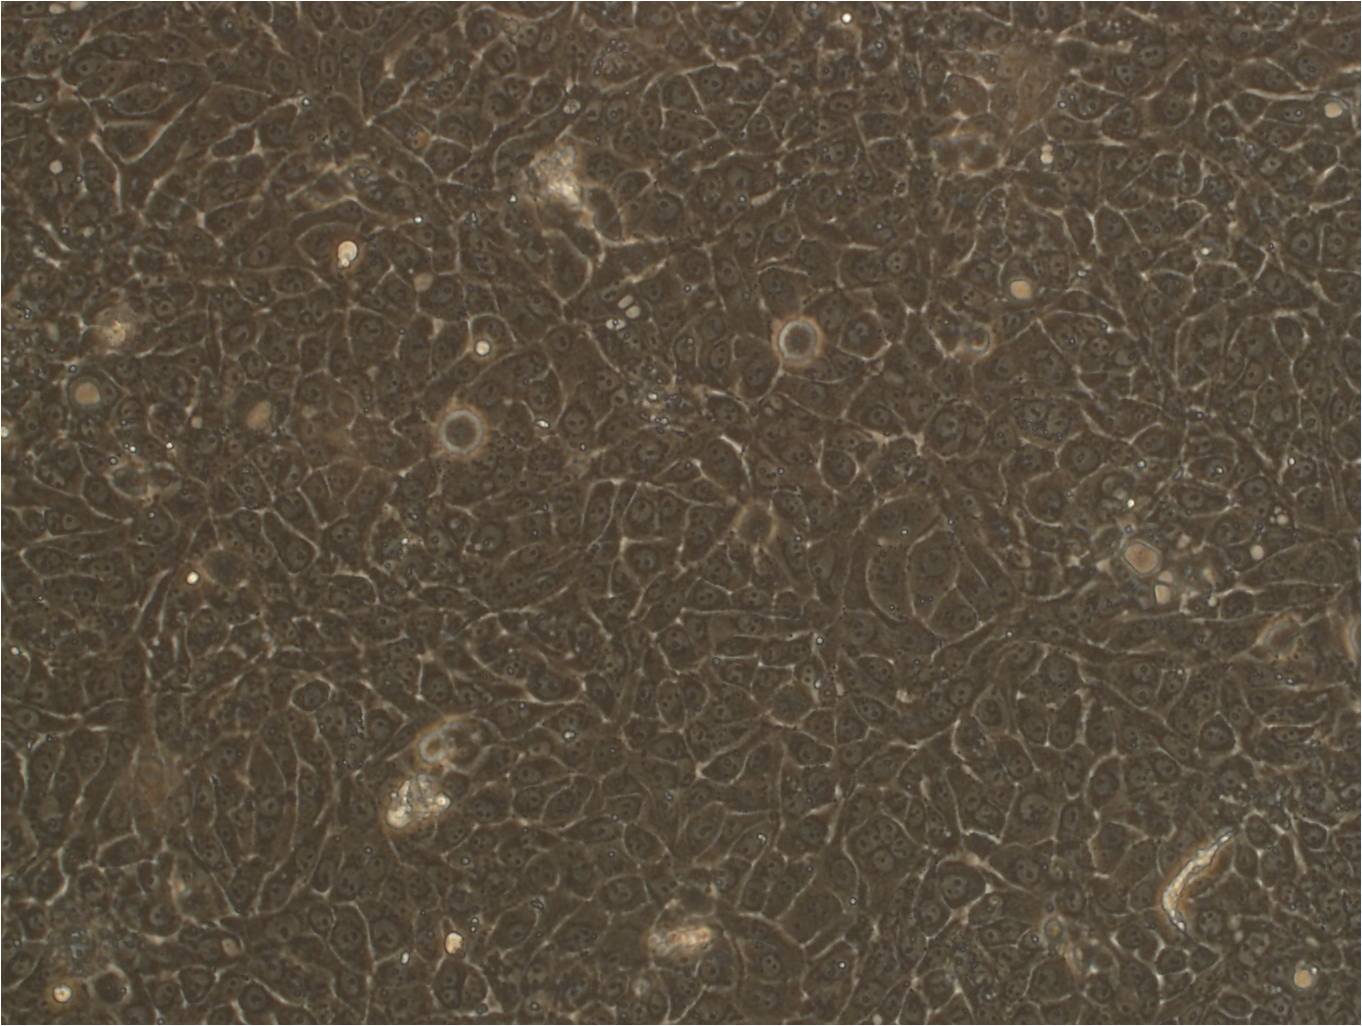 NSC-34 cell line鼠神经元细胞系,NSC-34 cell line